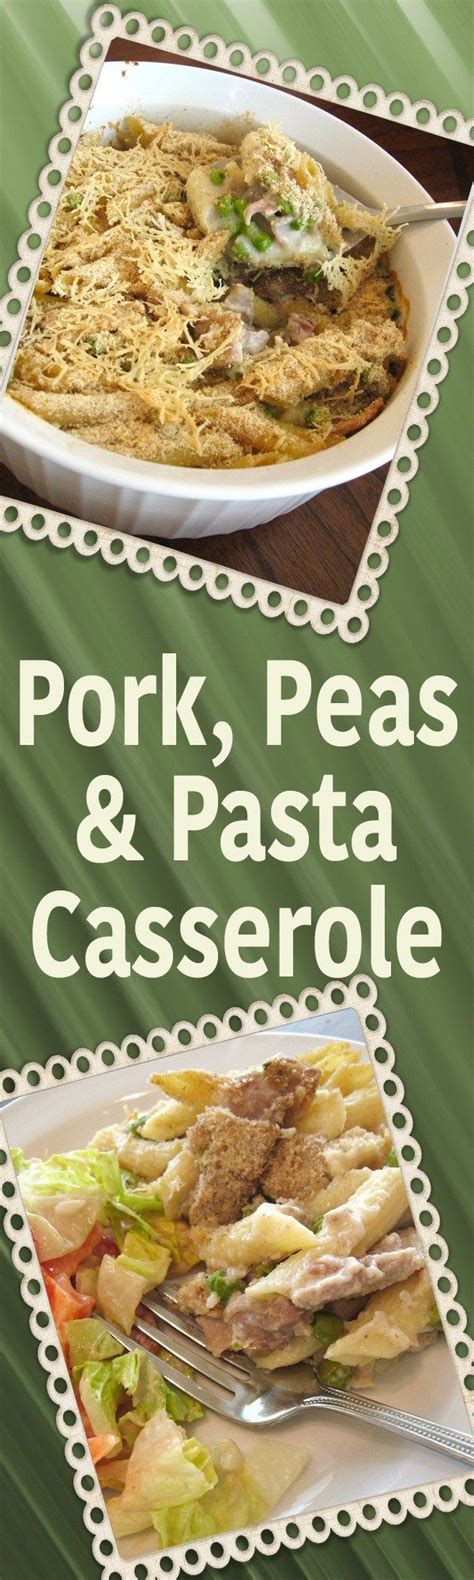 Pork tenderloin, bay leaf, green peppers, cream cheese, tomato puree and 6 more. Pork, Peas & Pasta Casserole | Leftover pork recipes, Pork ...